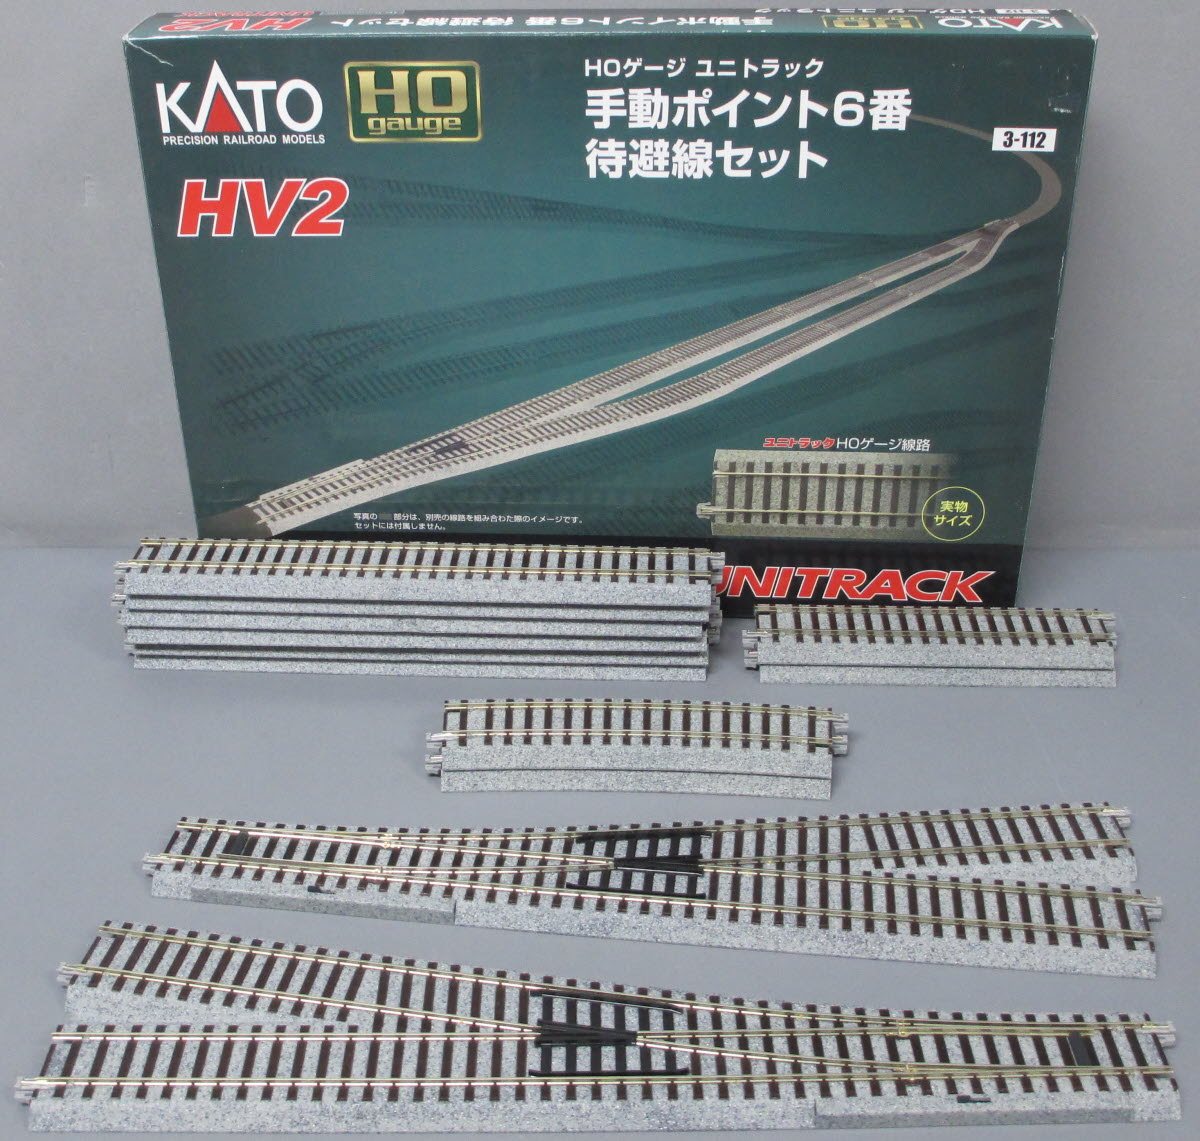 Kato 3-112 HO HV2 Passing Siding Track Set with #6 Manual Turnout